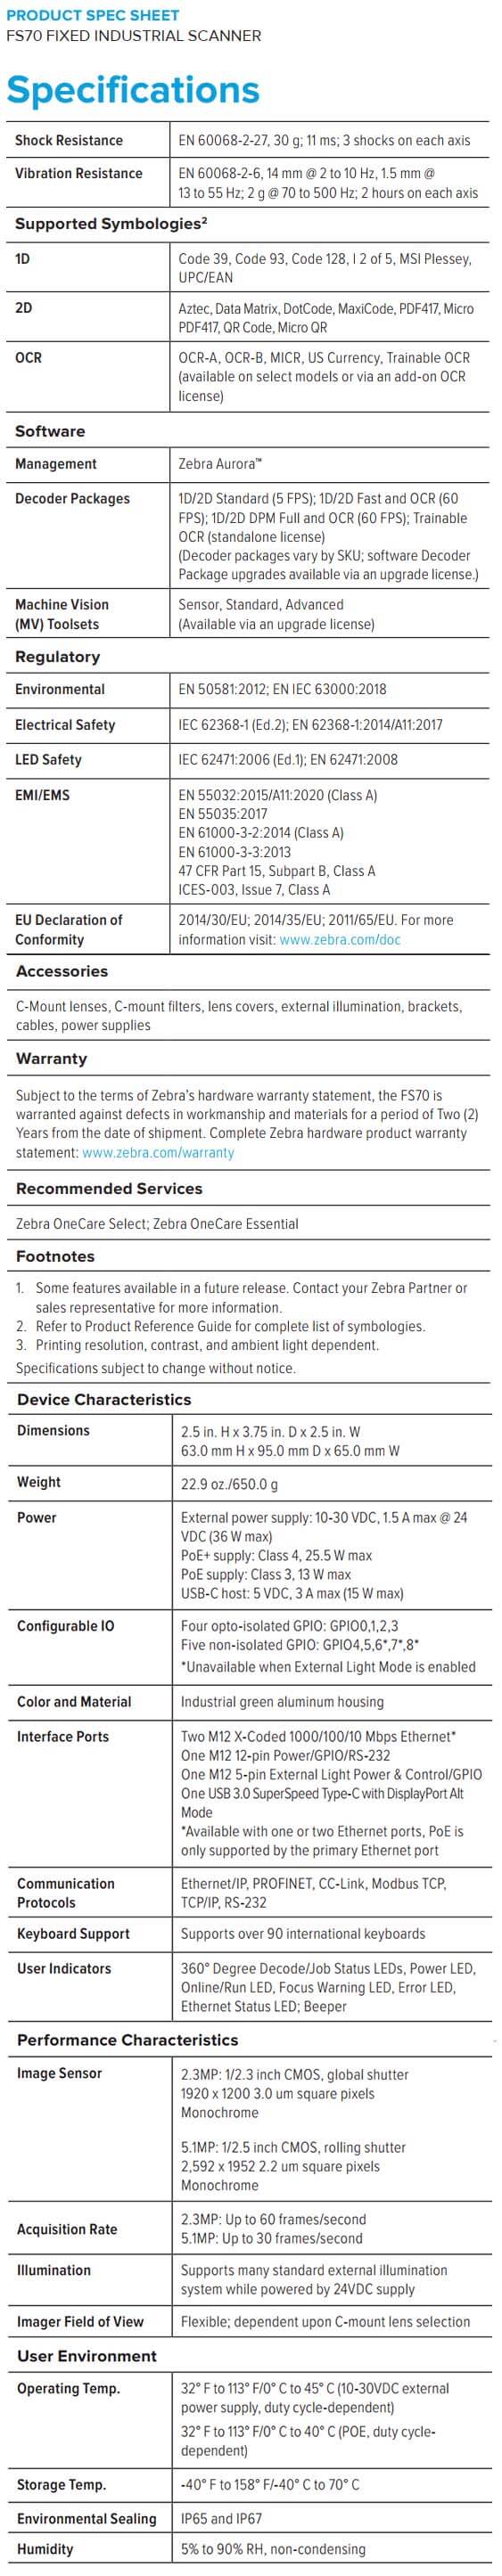 Zebra FS70 Fixed Industrial Scanner data sheet